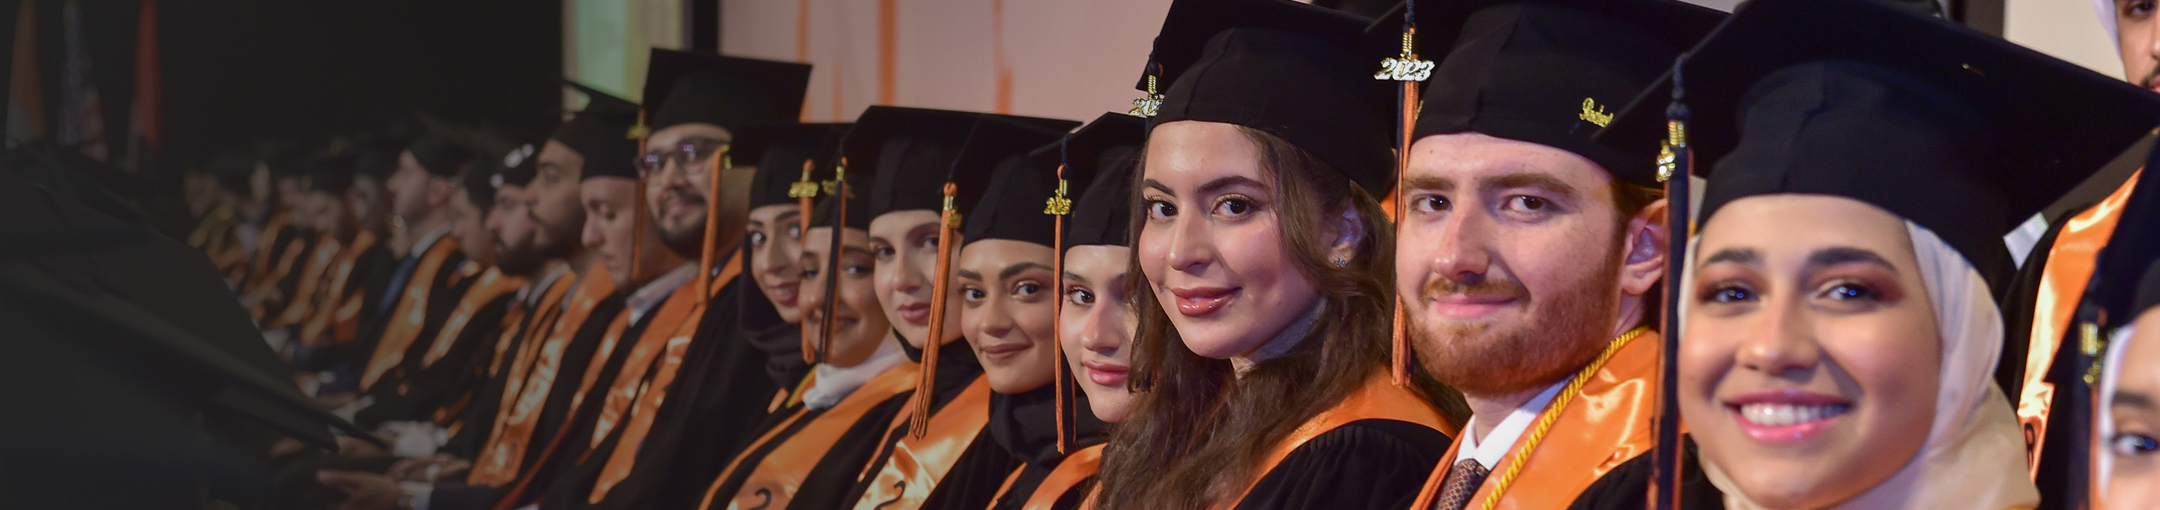 Graduating students during graduation ceremony